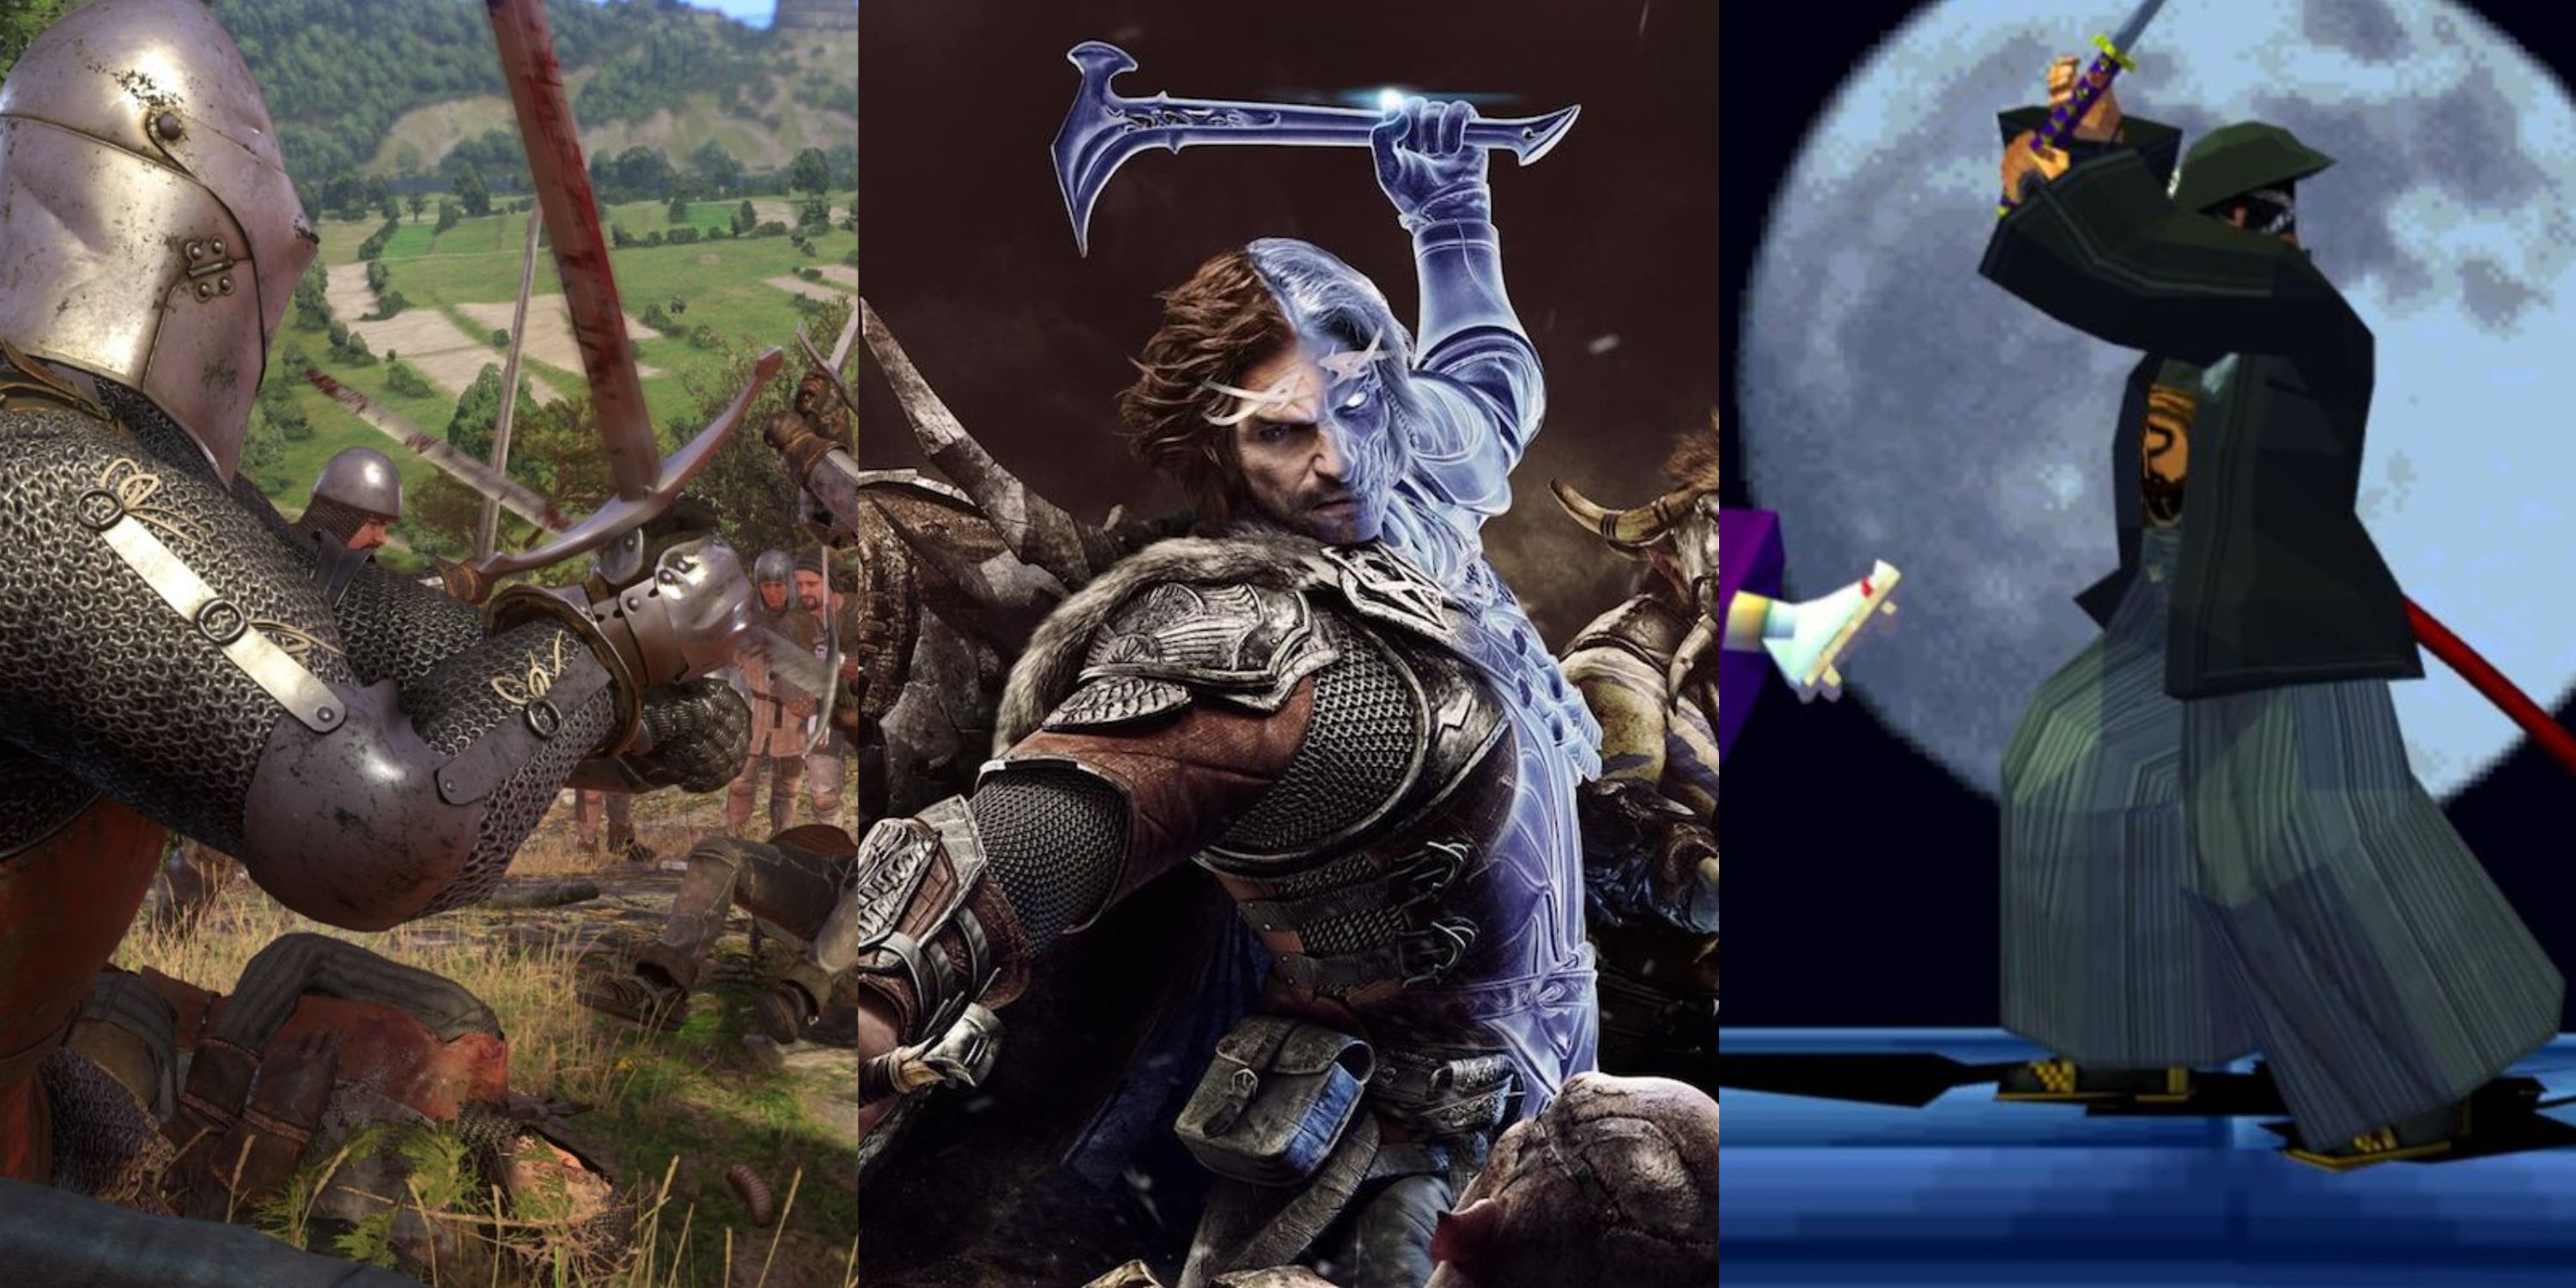 Best Sword Fighting Games Split Image Of Characters With Swords